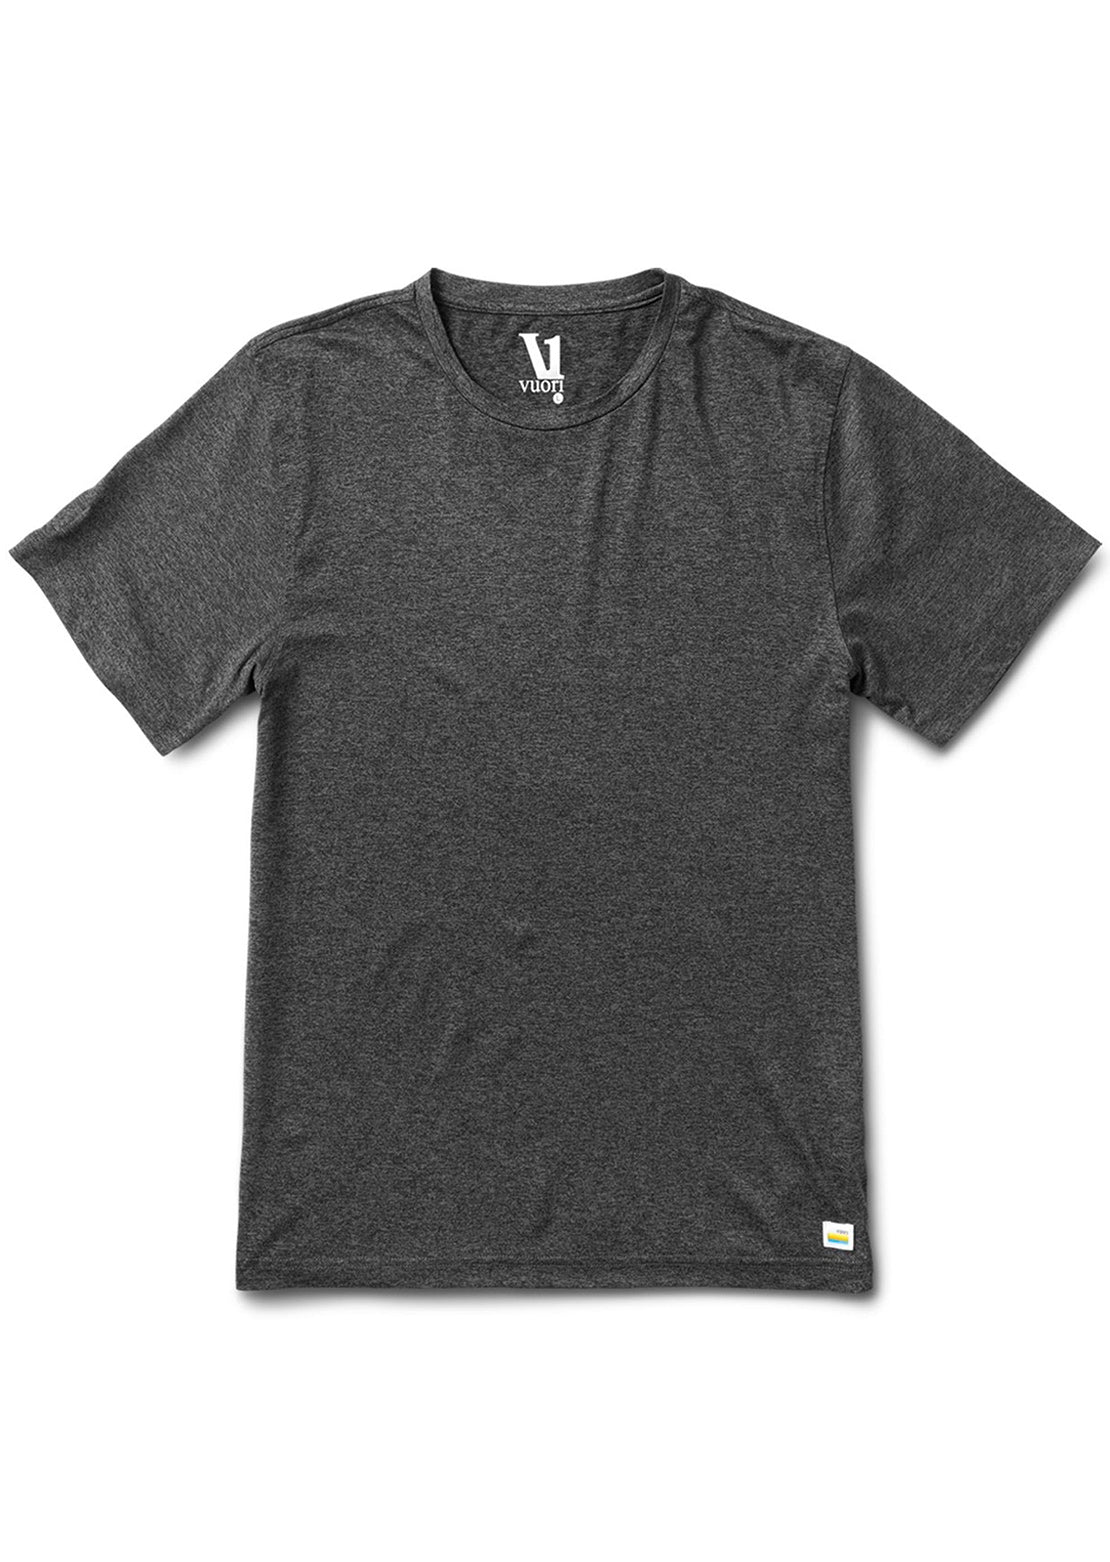 Vuori Men's Strato Tech T-Shirt - PRFO Sports